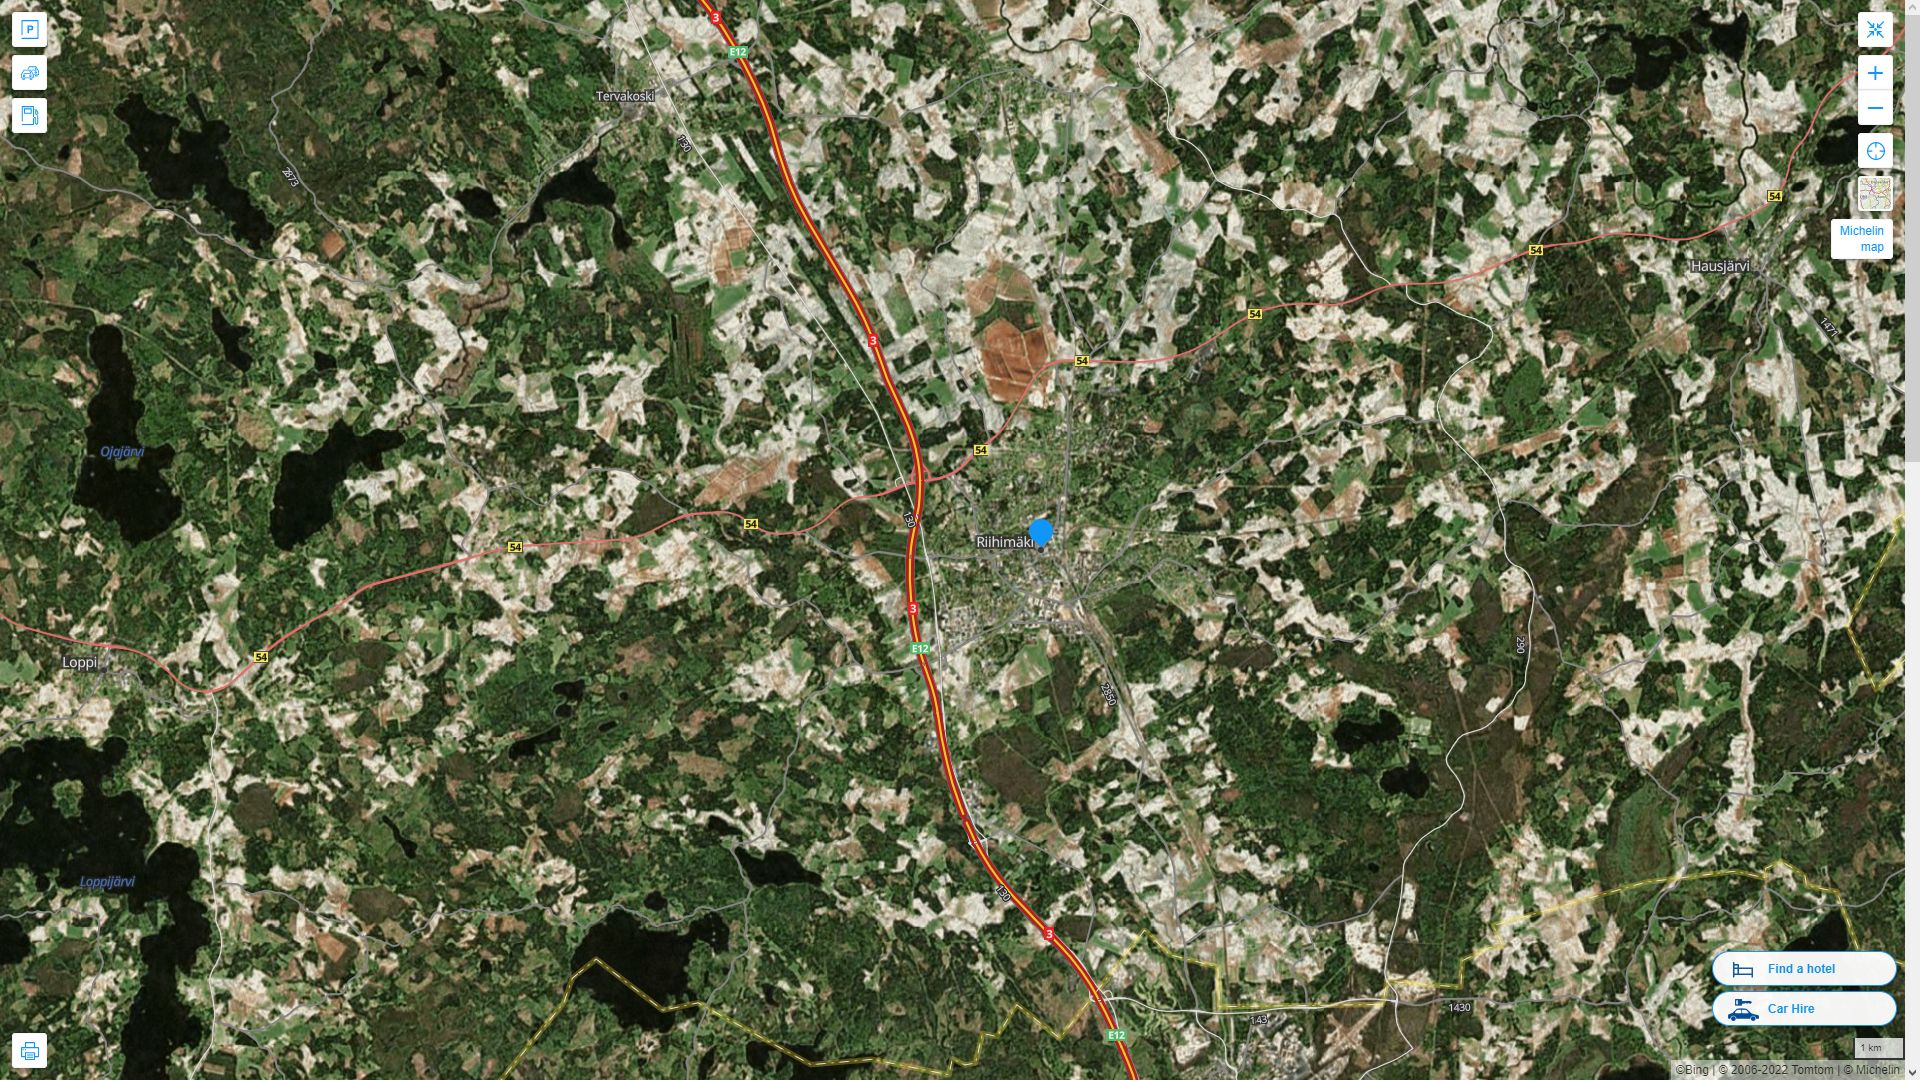 Riihimaki Finlande Autoroute et carte routiere avec vue satellite